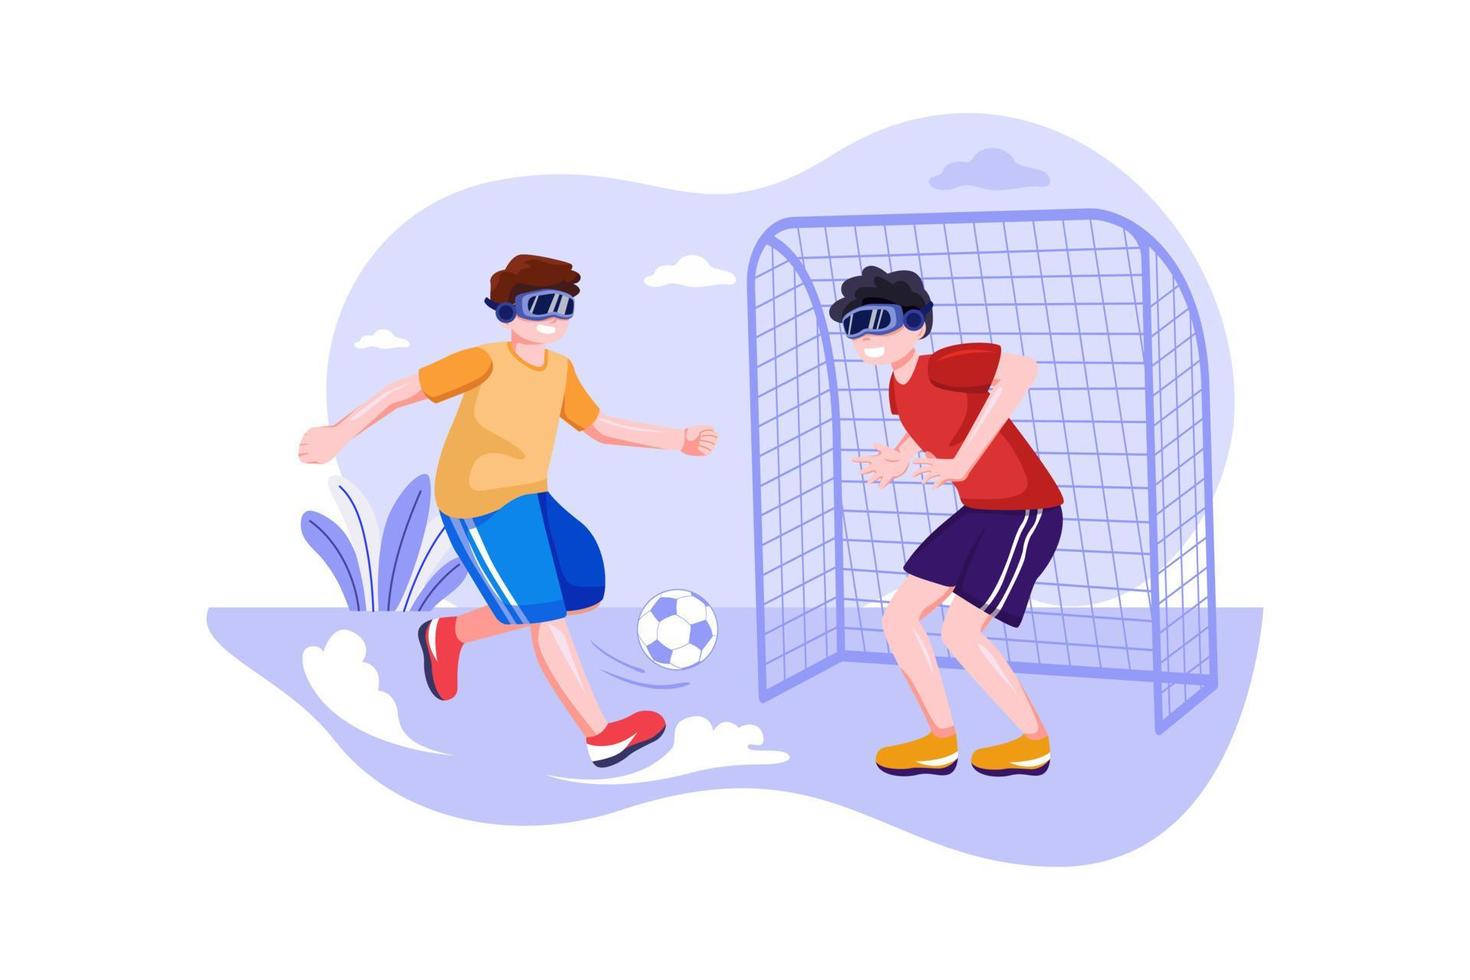 menino jogando futebol usando tecnologia vr vetor